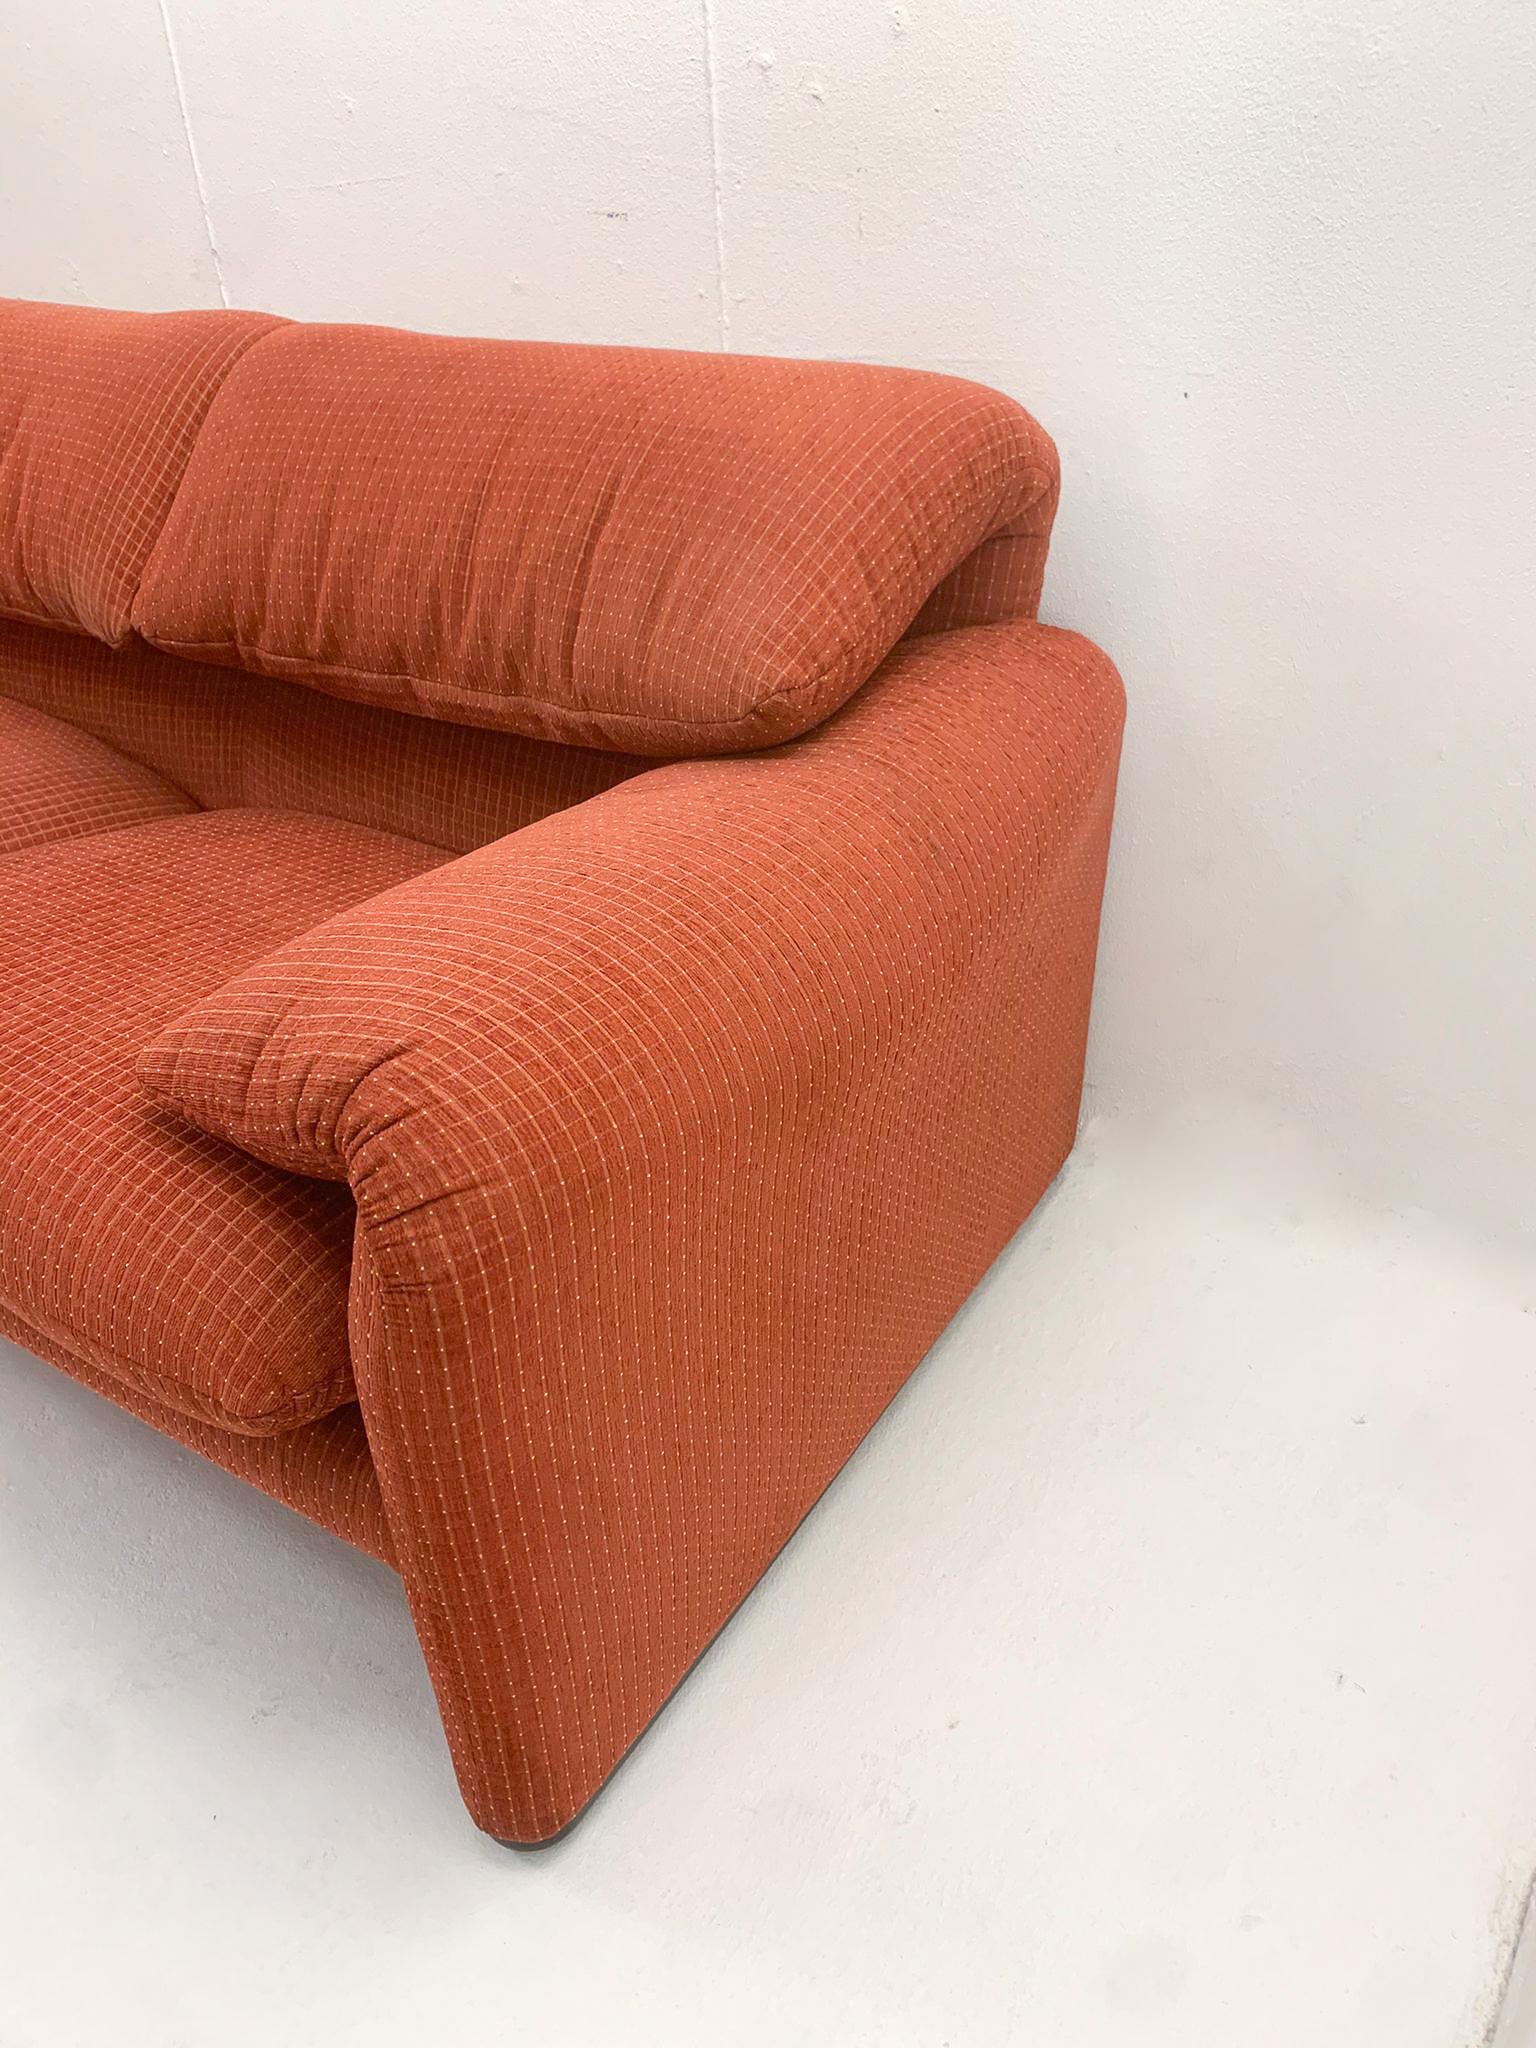 Mid-Century Modern Maralunga sofa by Vico Magistretti, Original red fabric, 1970s.